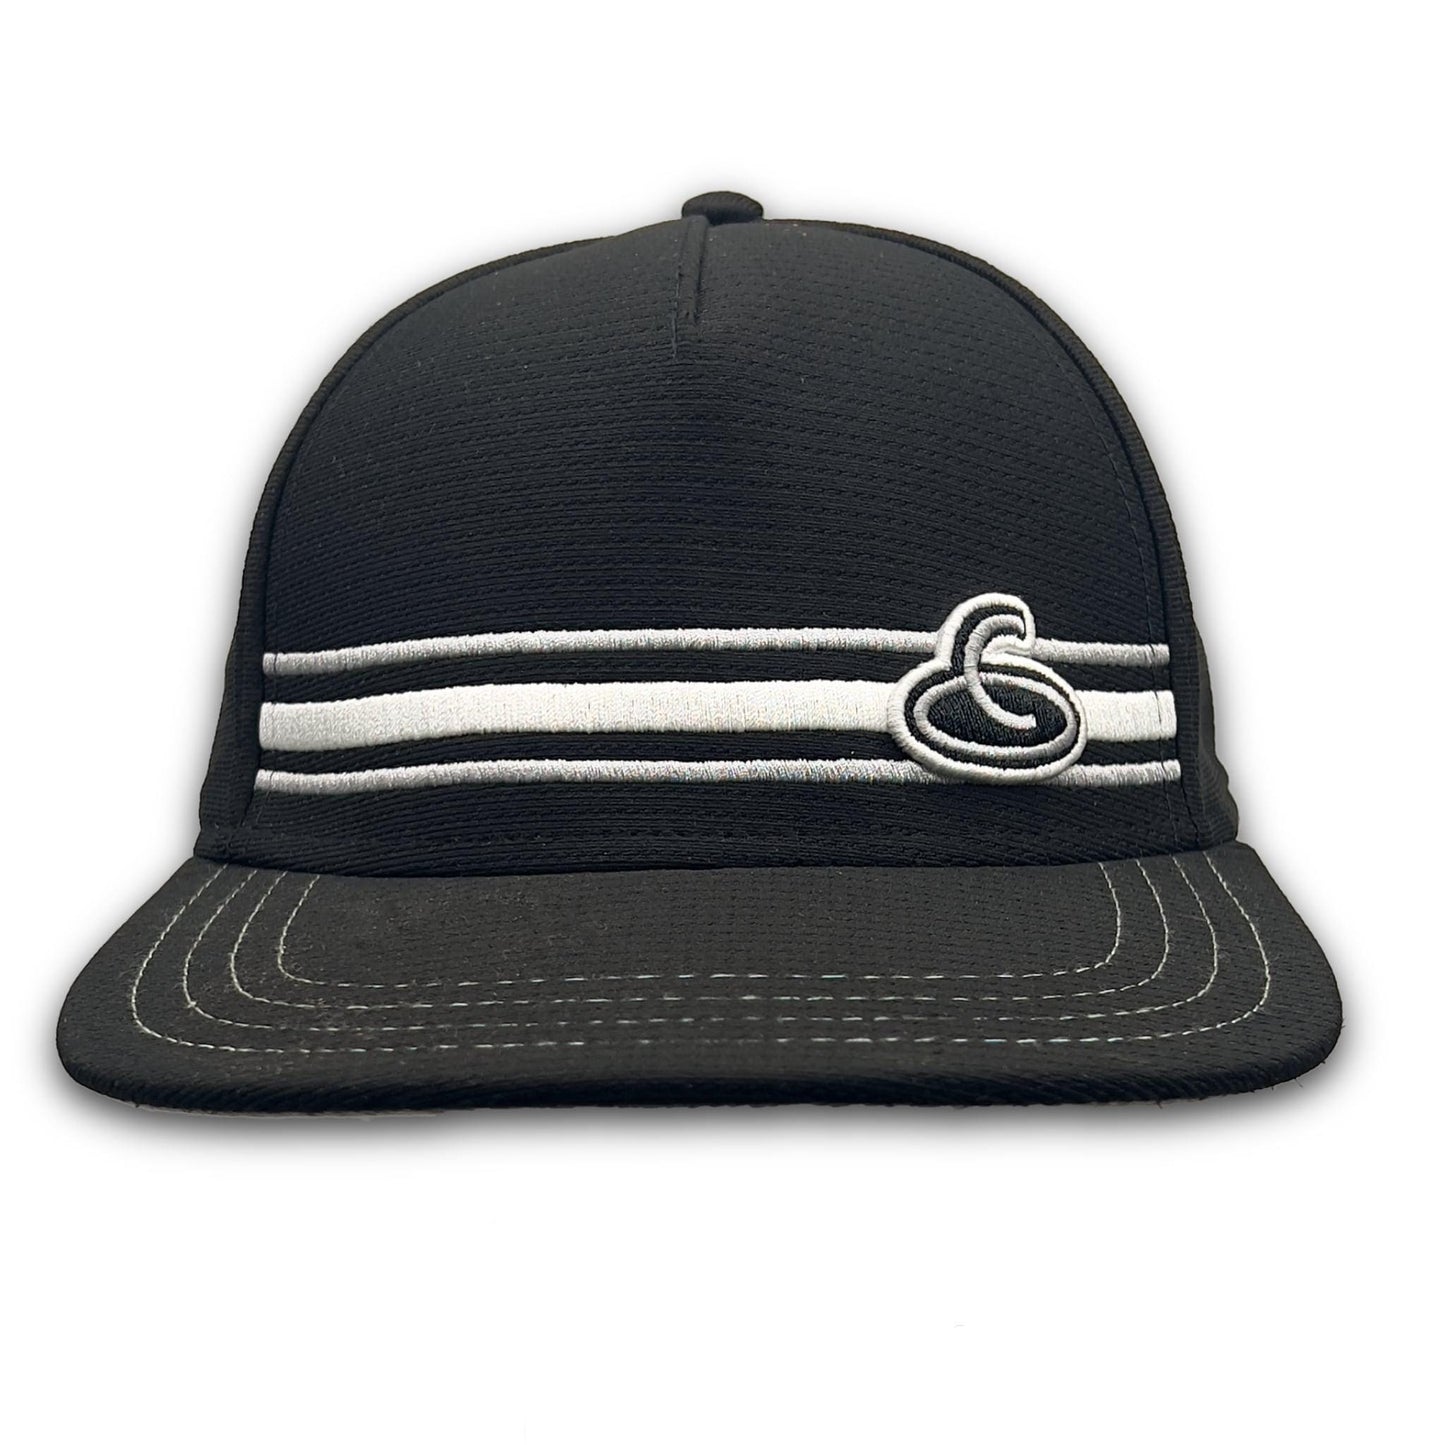 coLLo AppareL Hats BLACK / S/M MIKE FLAT BILL